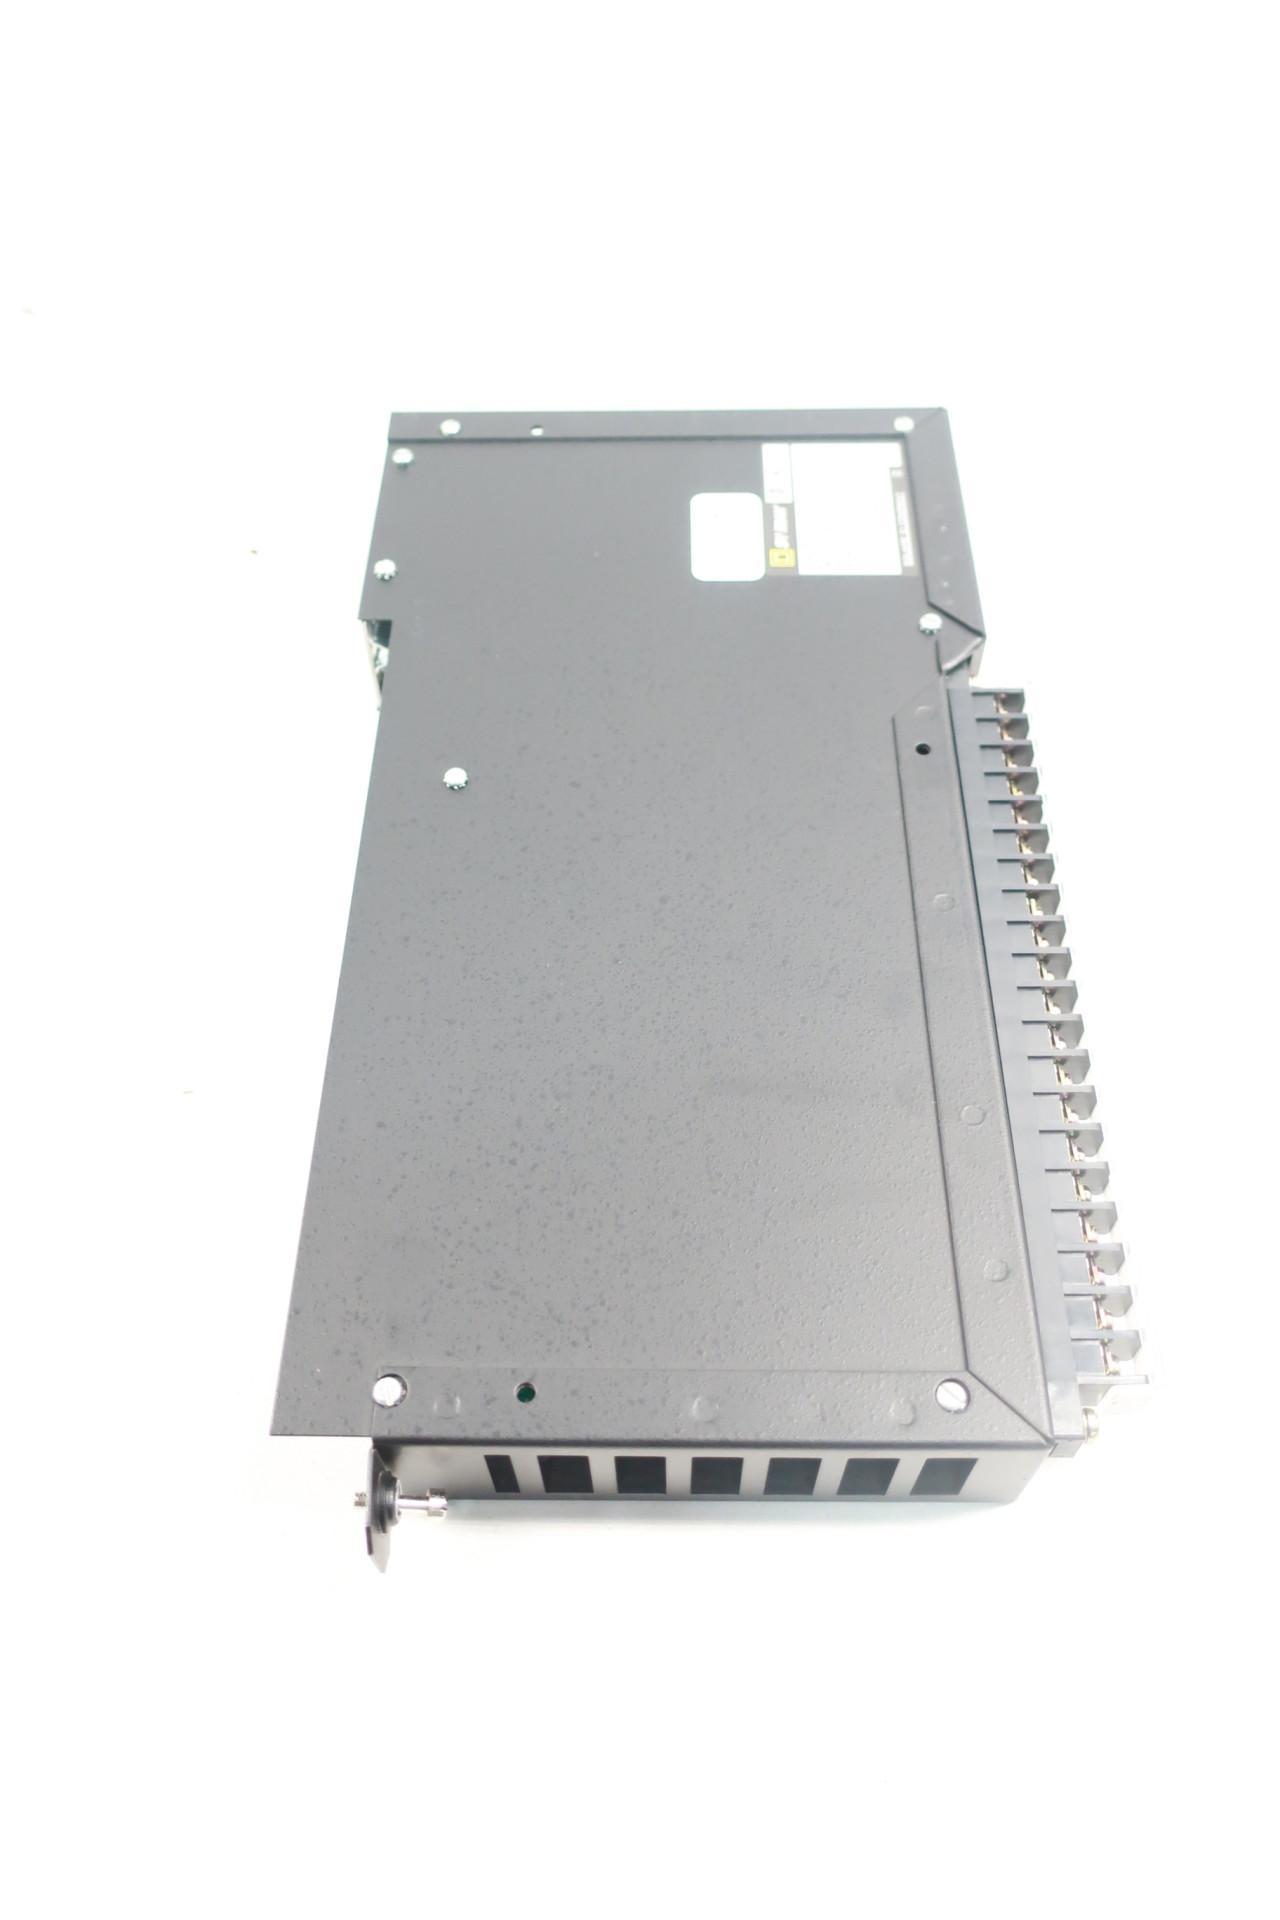 USED Square D 8030 RIM-101 SY/MAX Input Module Series C1 